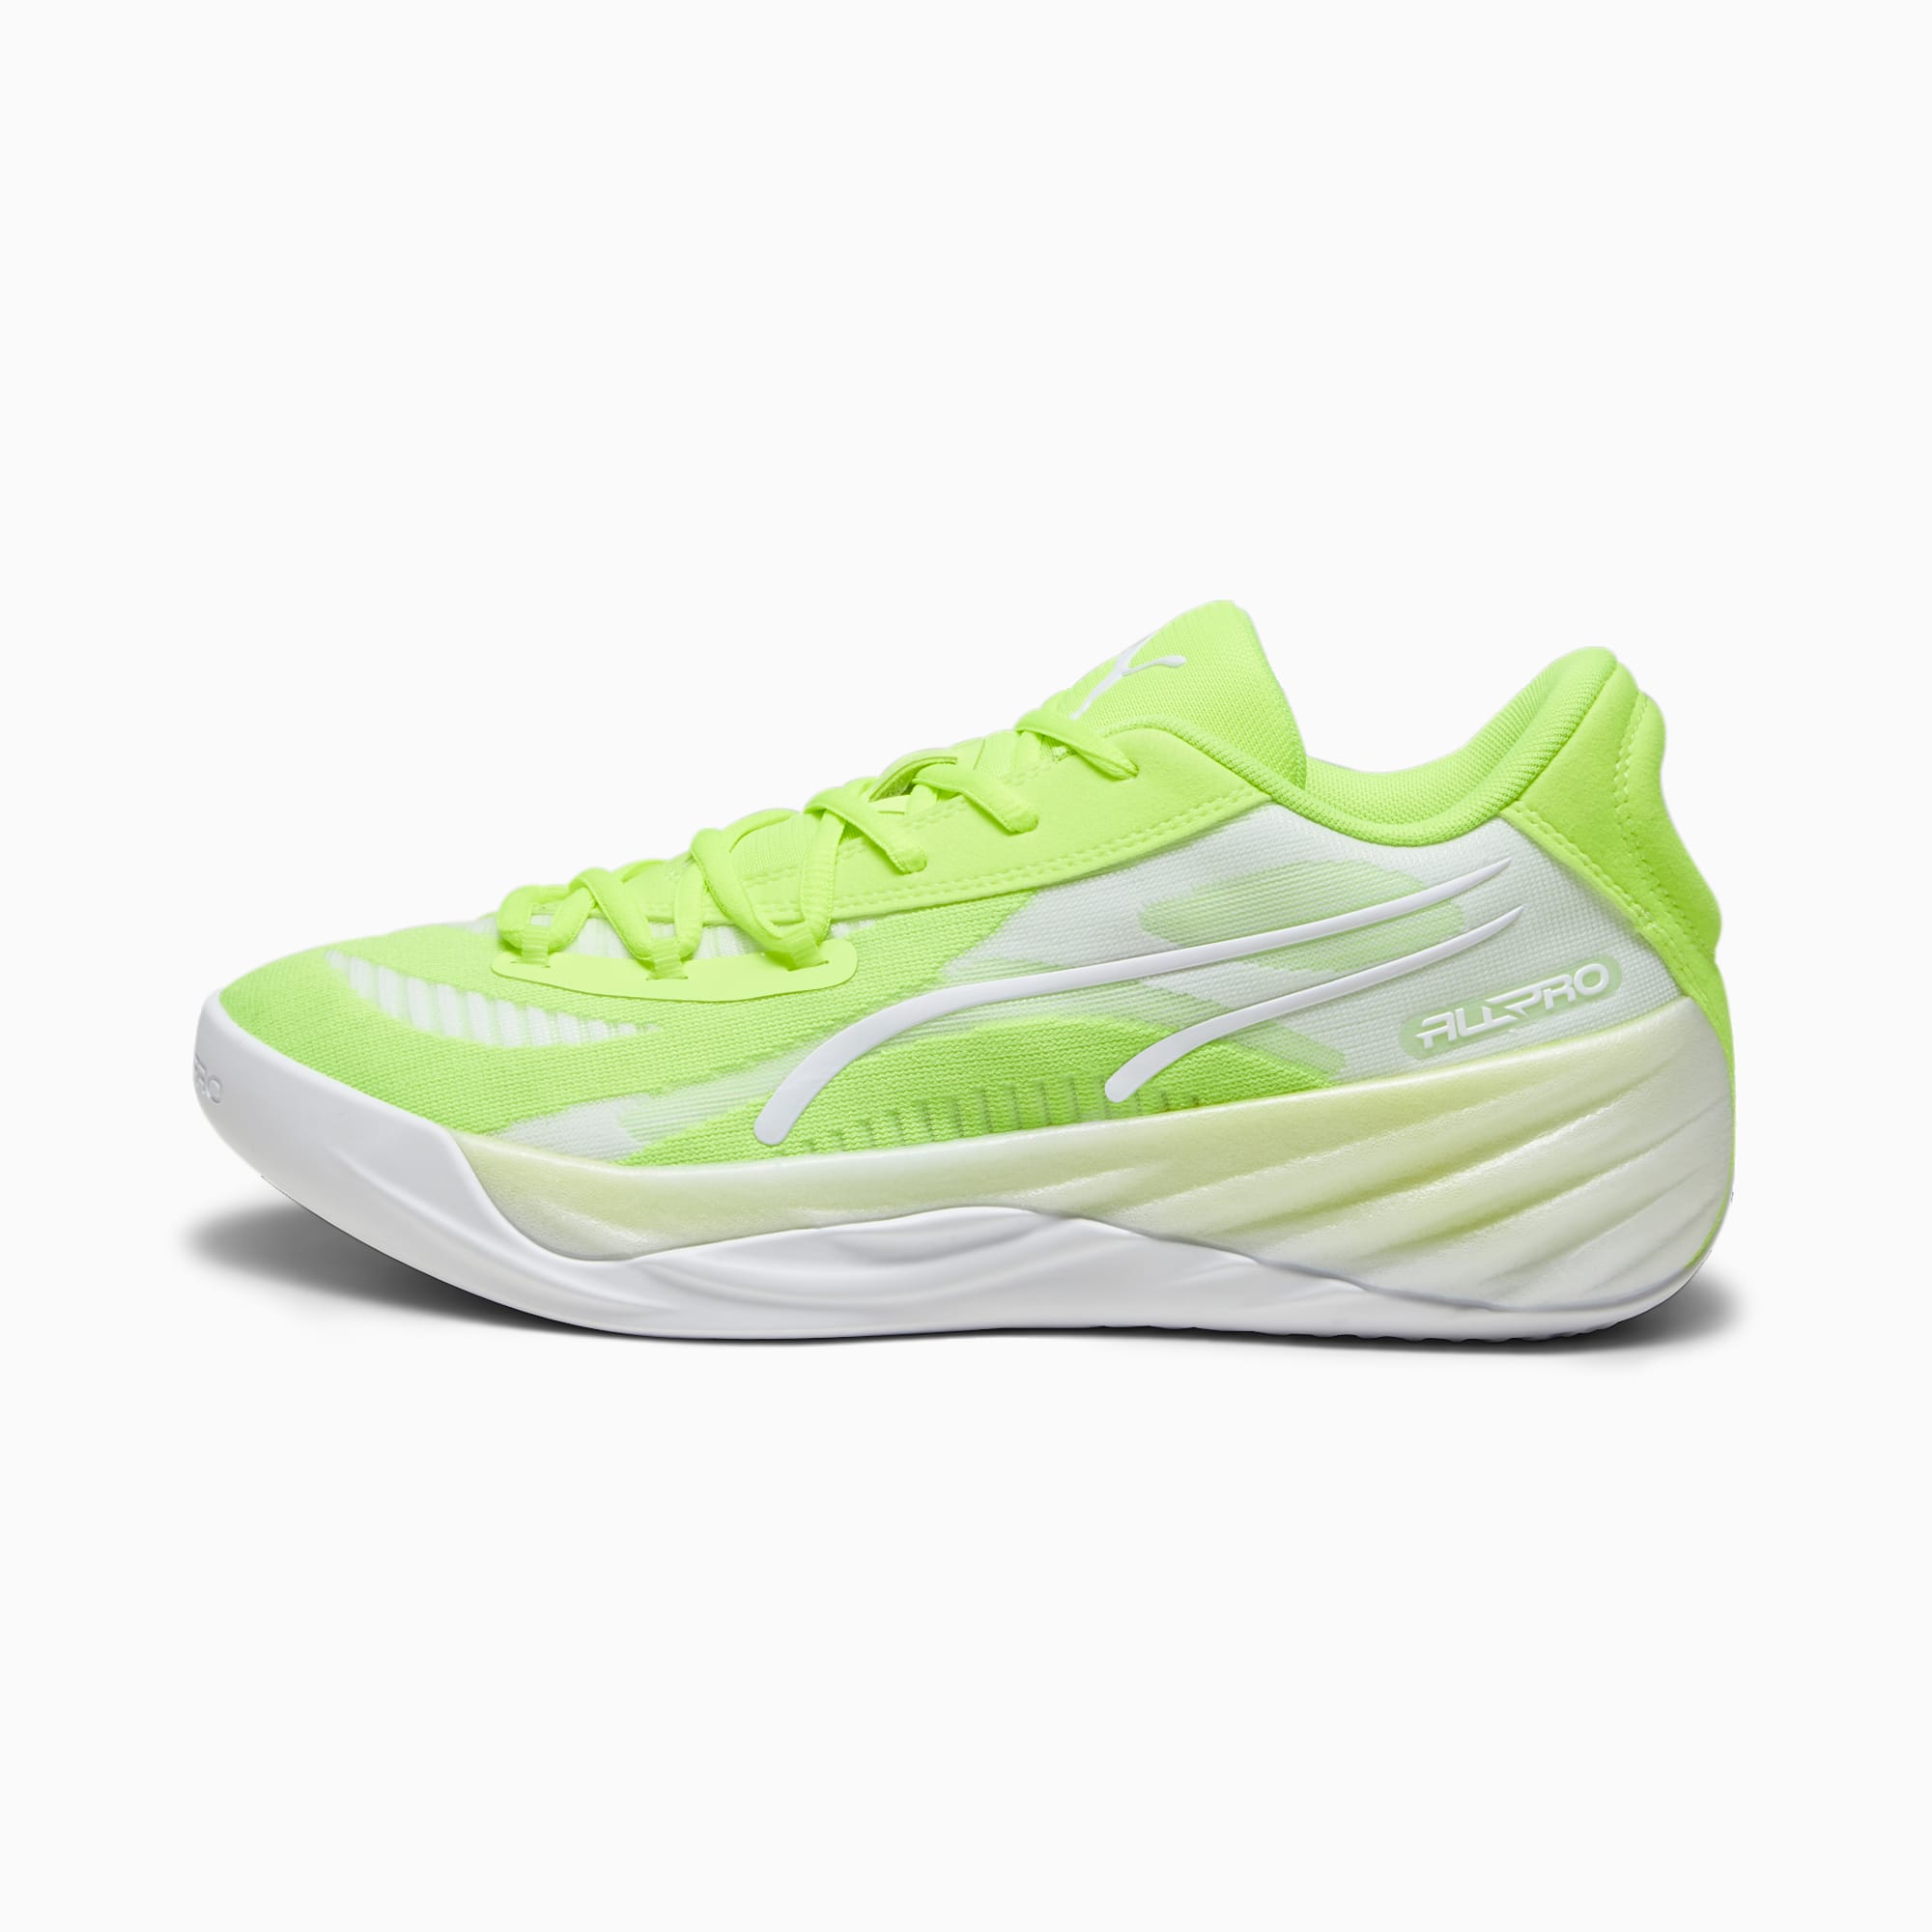 All-Pro NITRO Basketball Shoes | Lime Squeeze-PUMA White | PUMA Shop ...